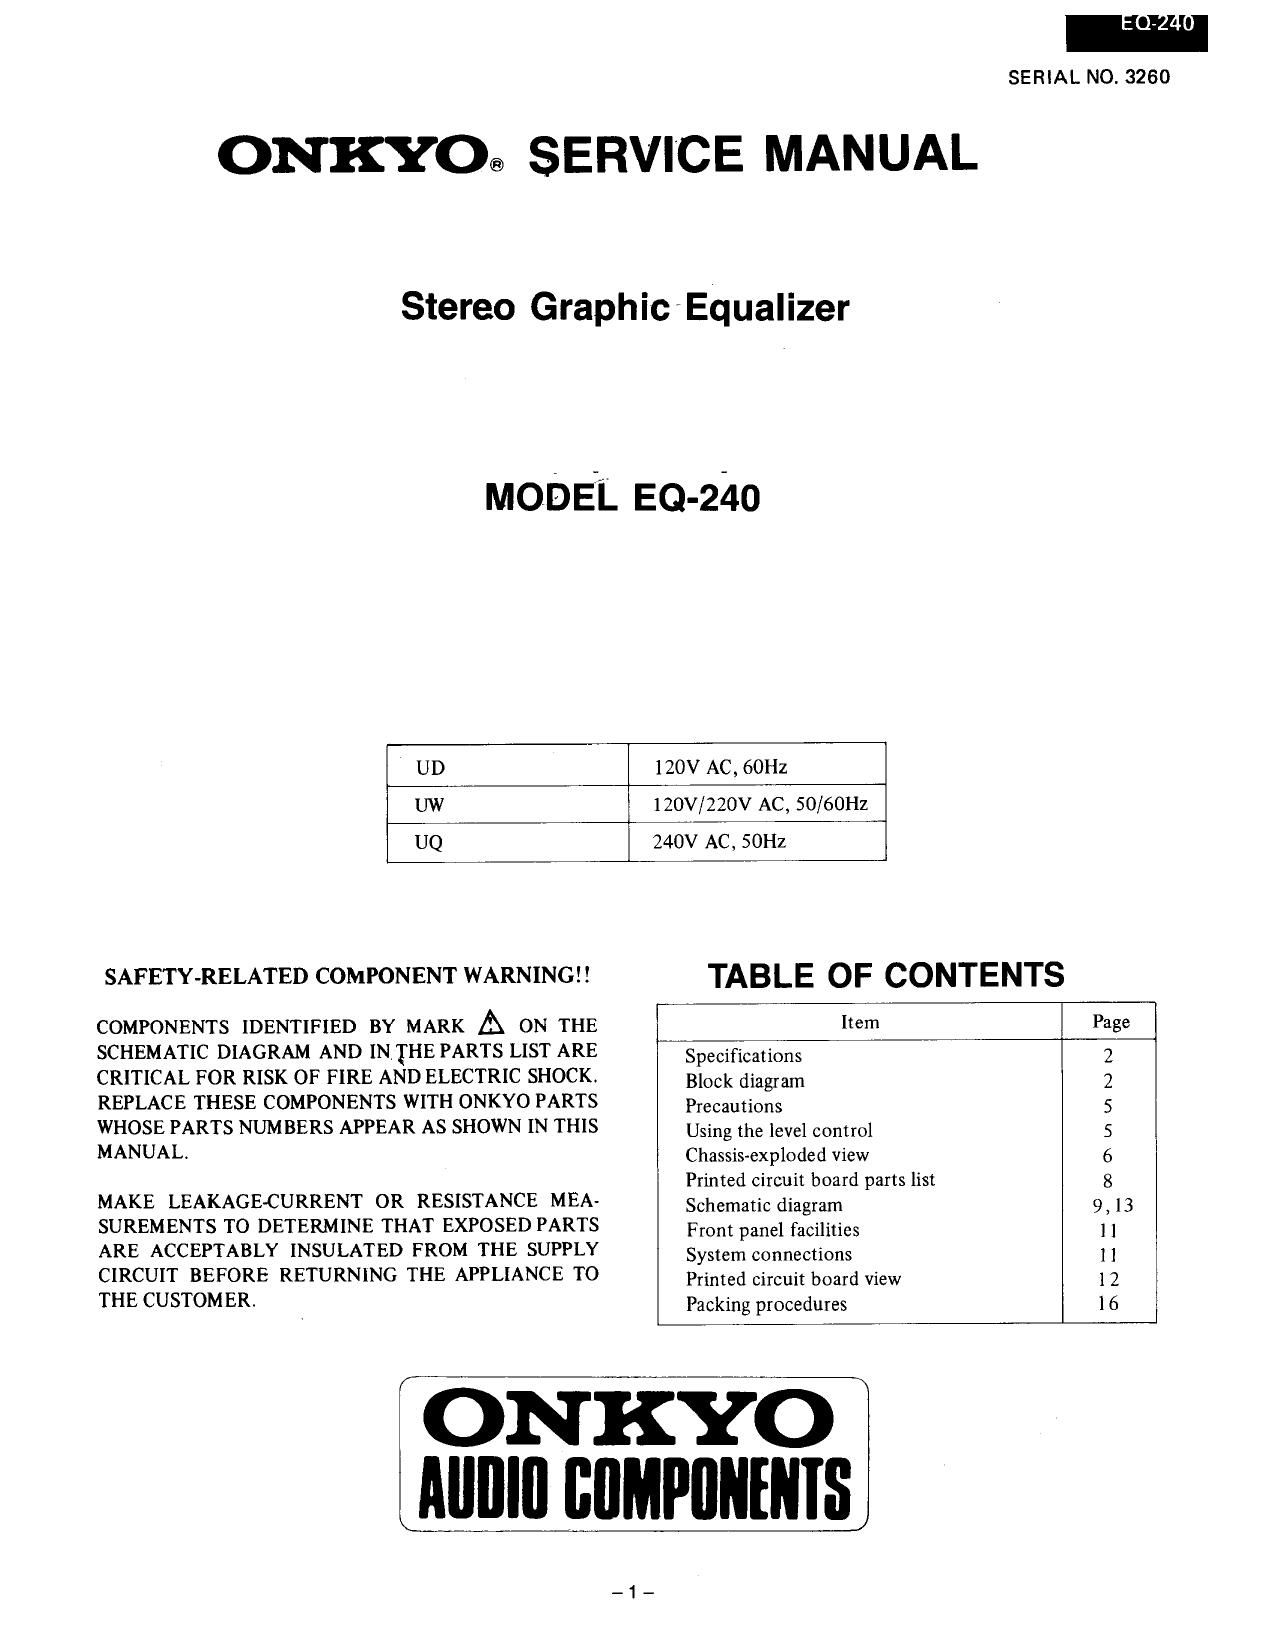 Onkyo EQ 240 Service Manual